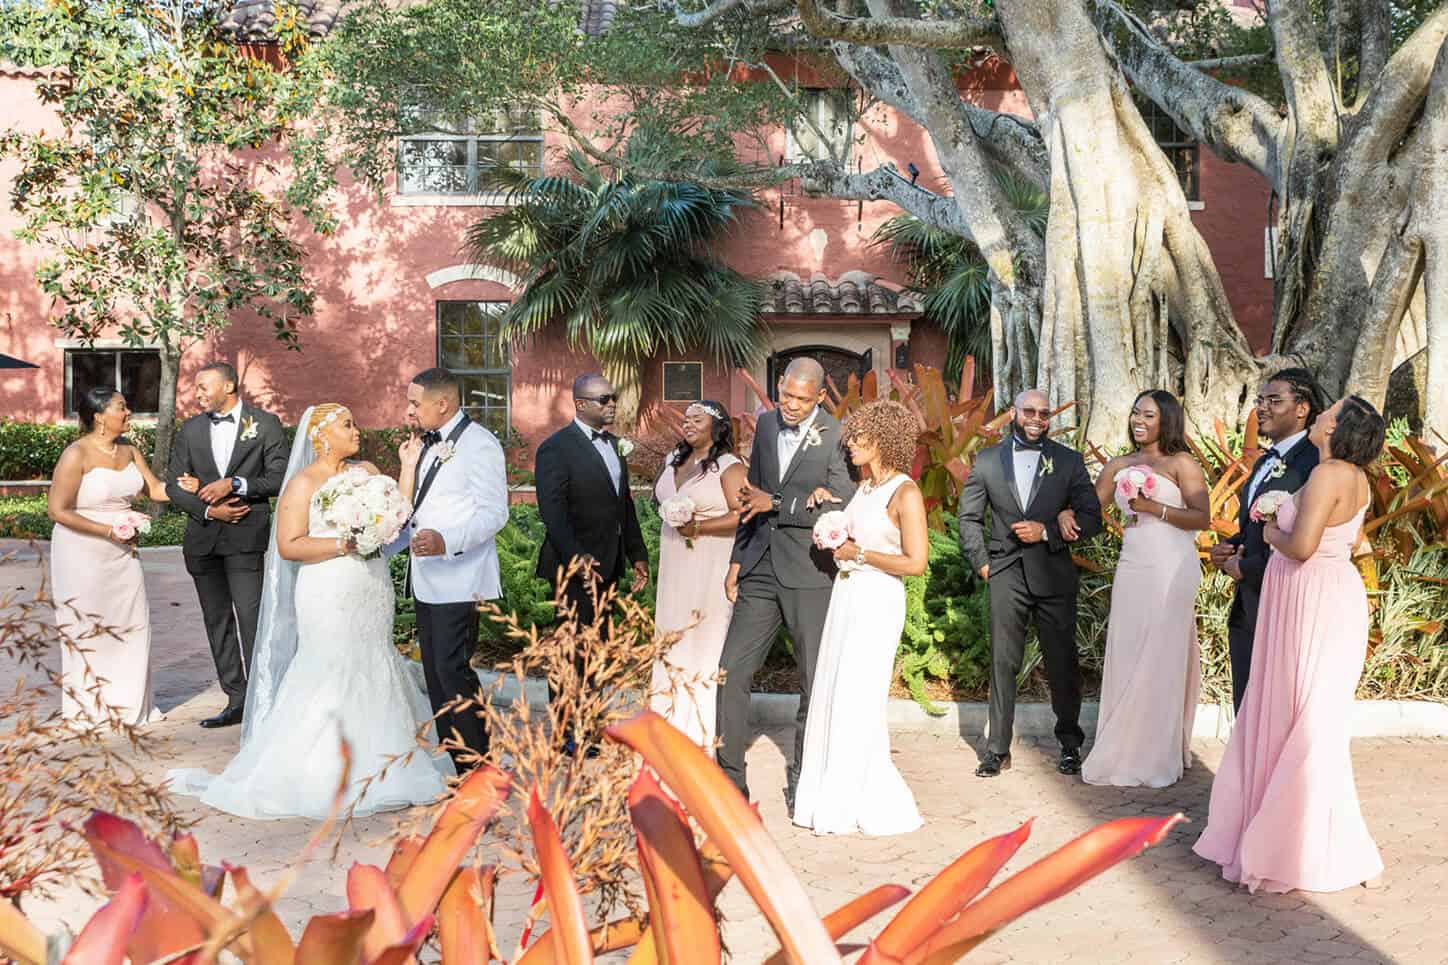 Wedding Party Photo at Thalatta Estate in South Florida